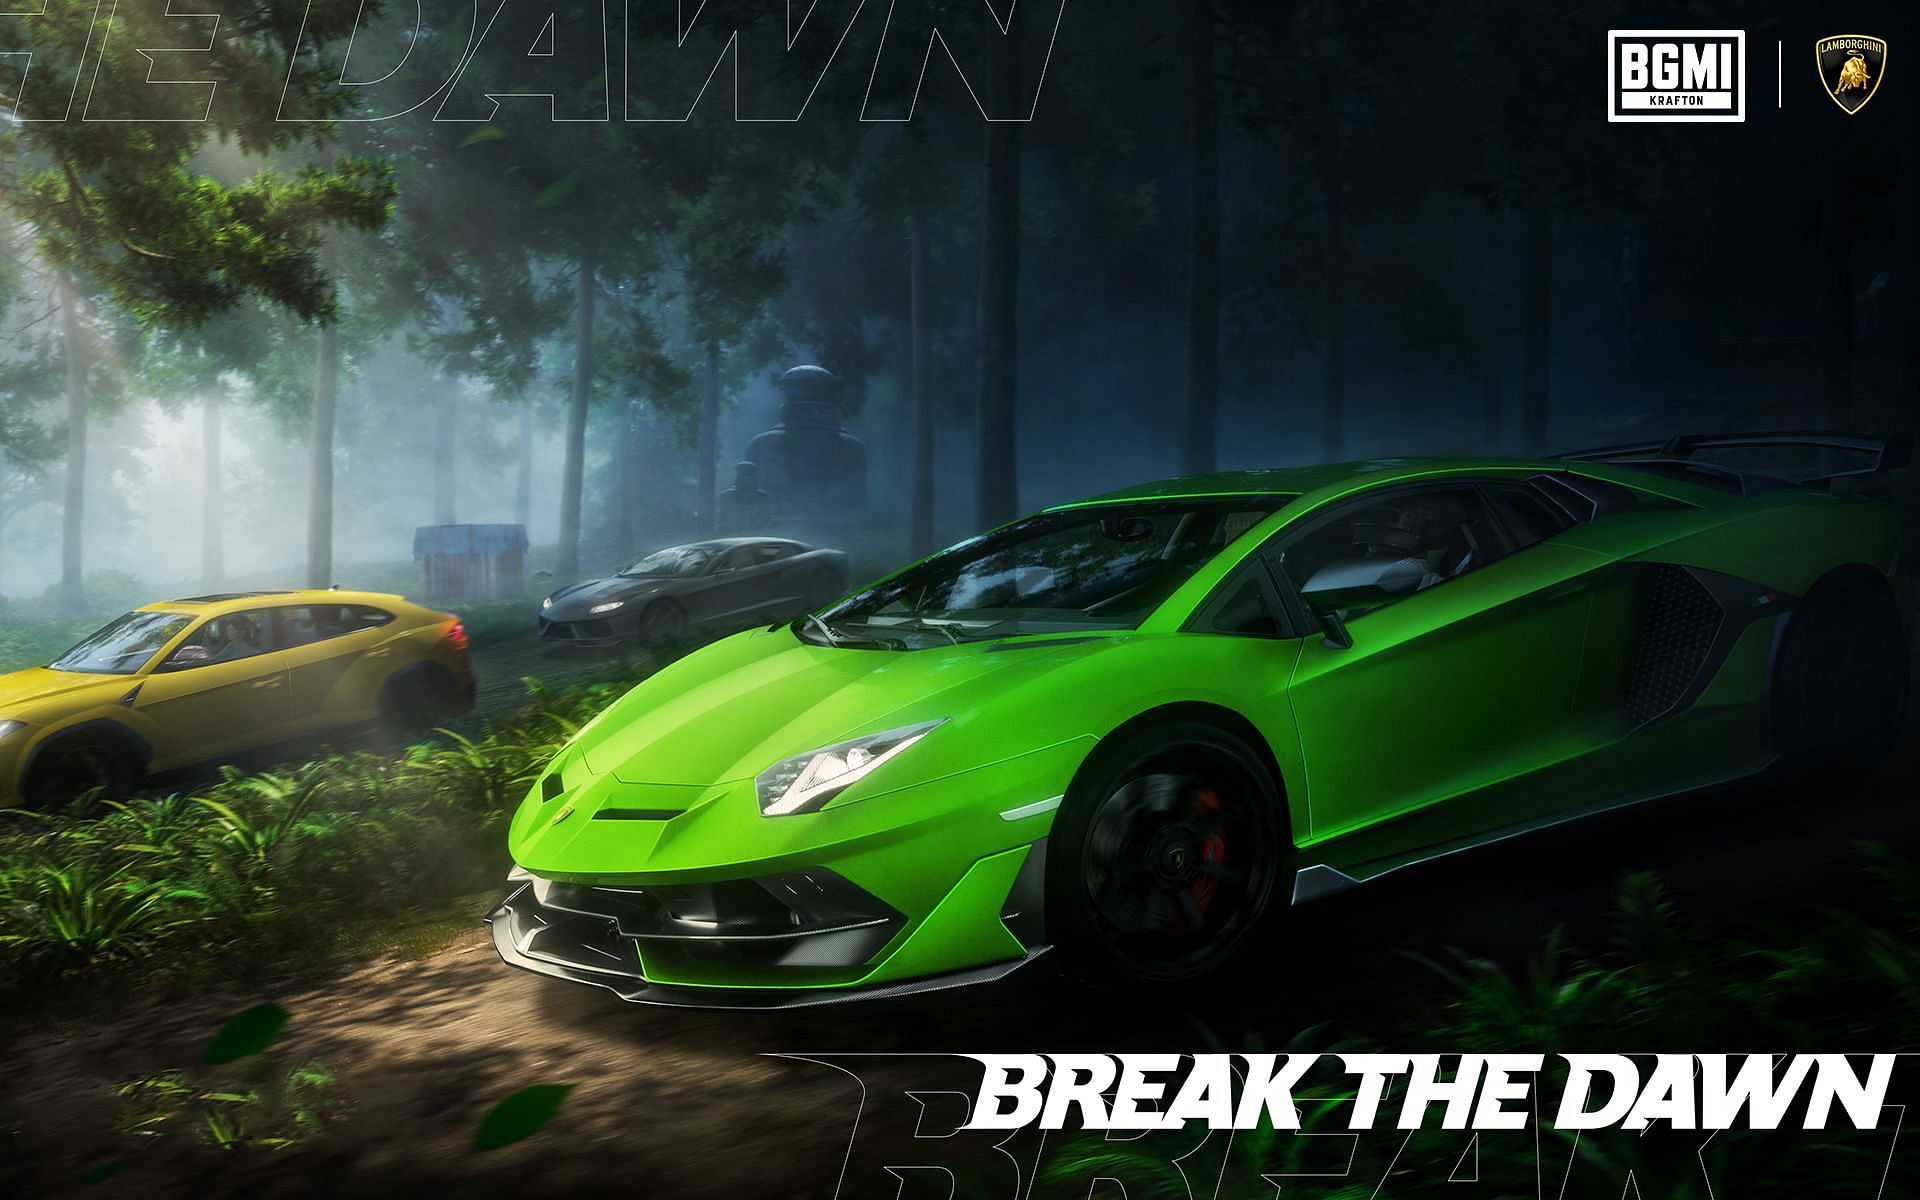 BGMI x Lamborghini collaboration to bring exclusive vehicle skins